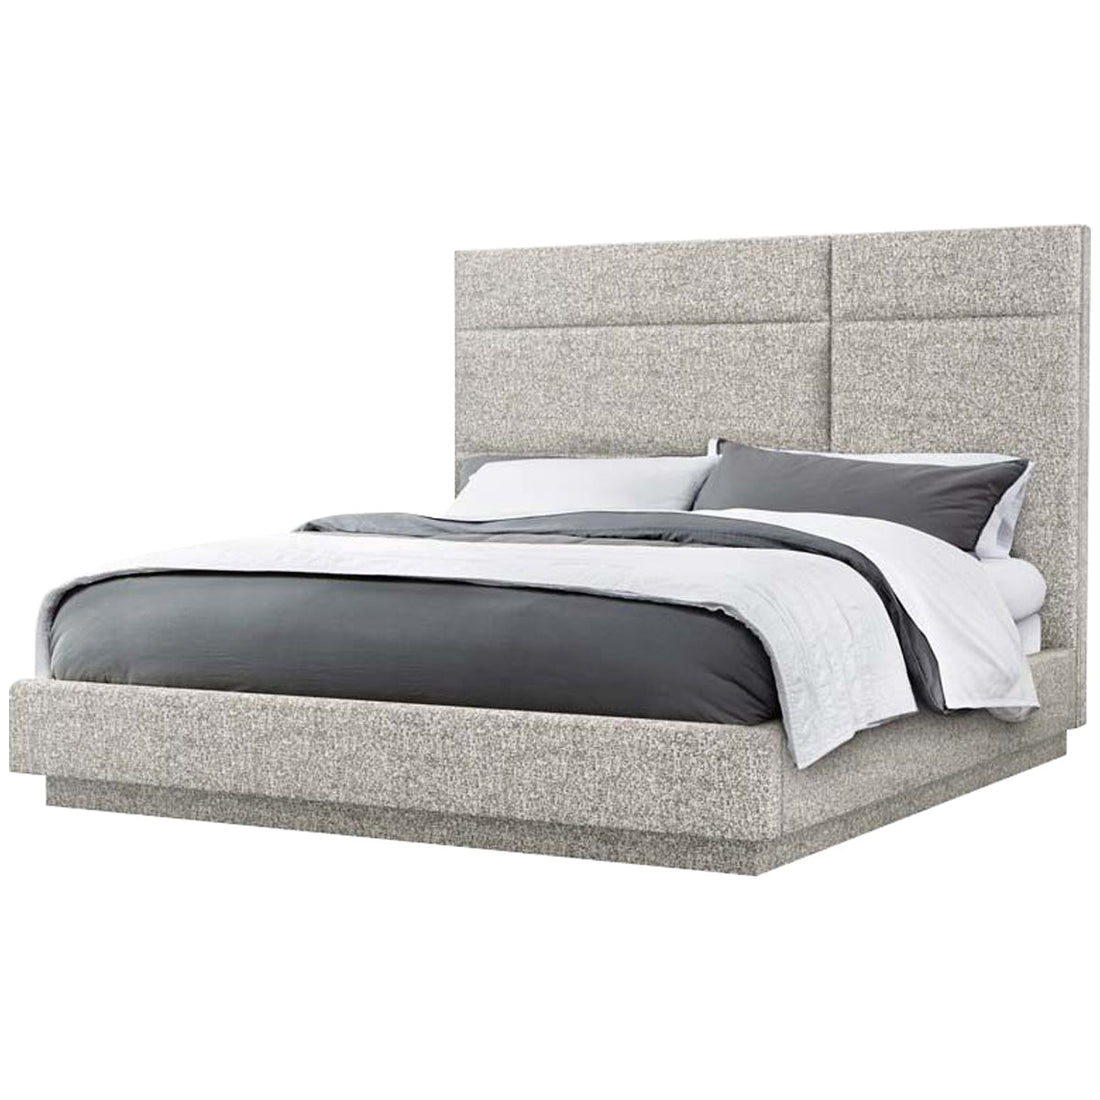 Interlude Home Quadrant Bed - Breeze